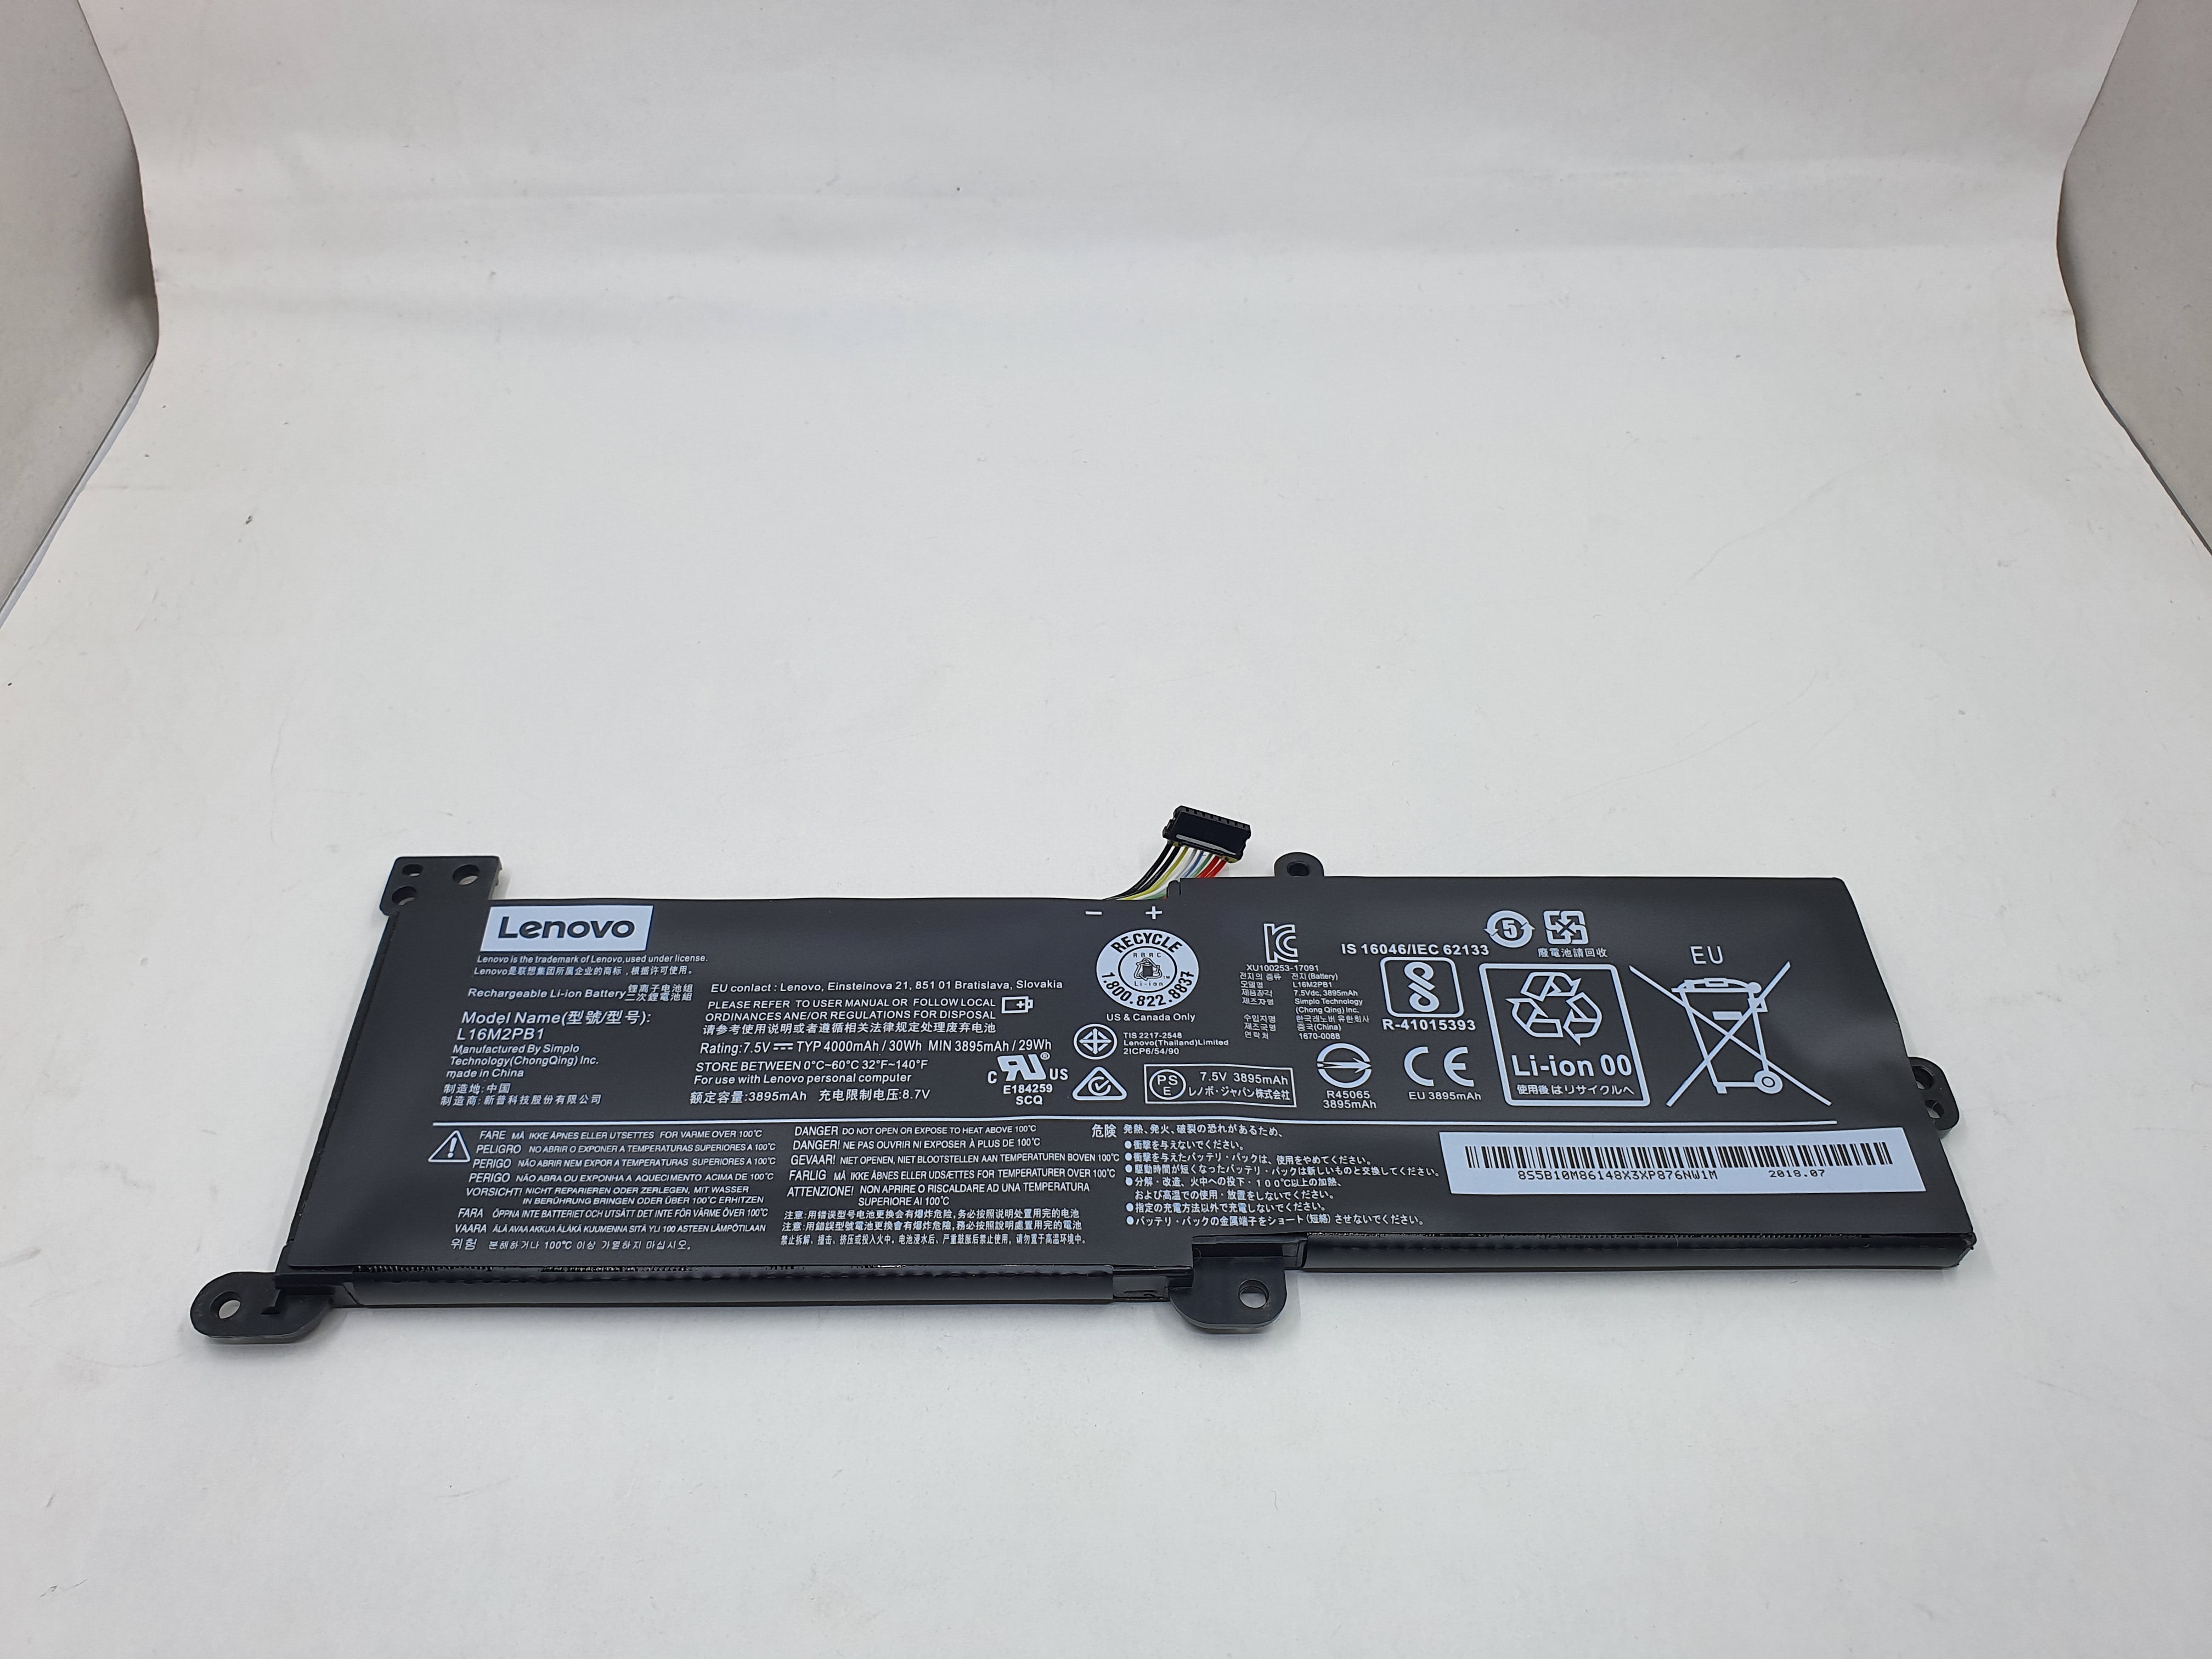 Lenovo Battery S145-14IGM A1 for Replacement - Lenovo IdeaPad S145-14IGM